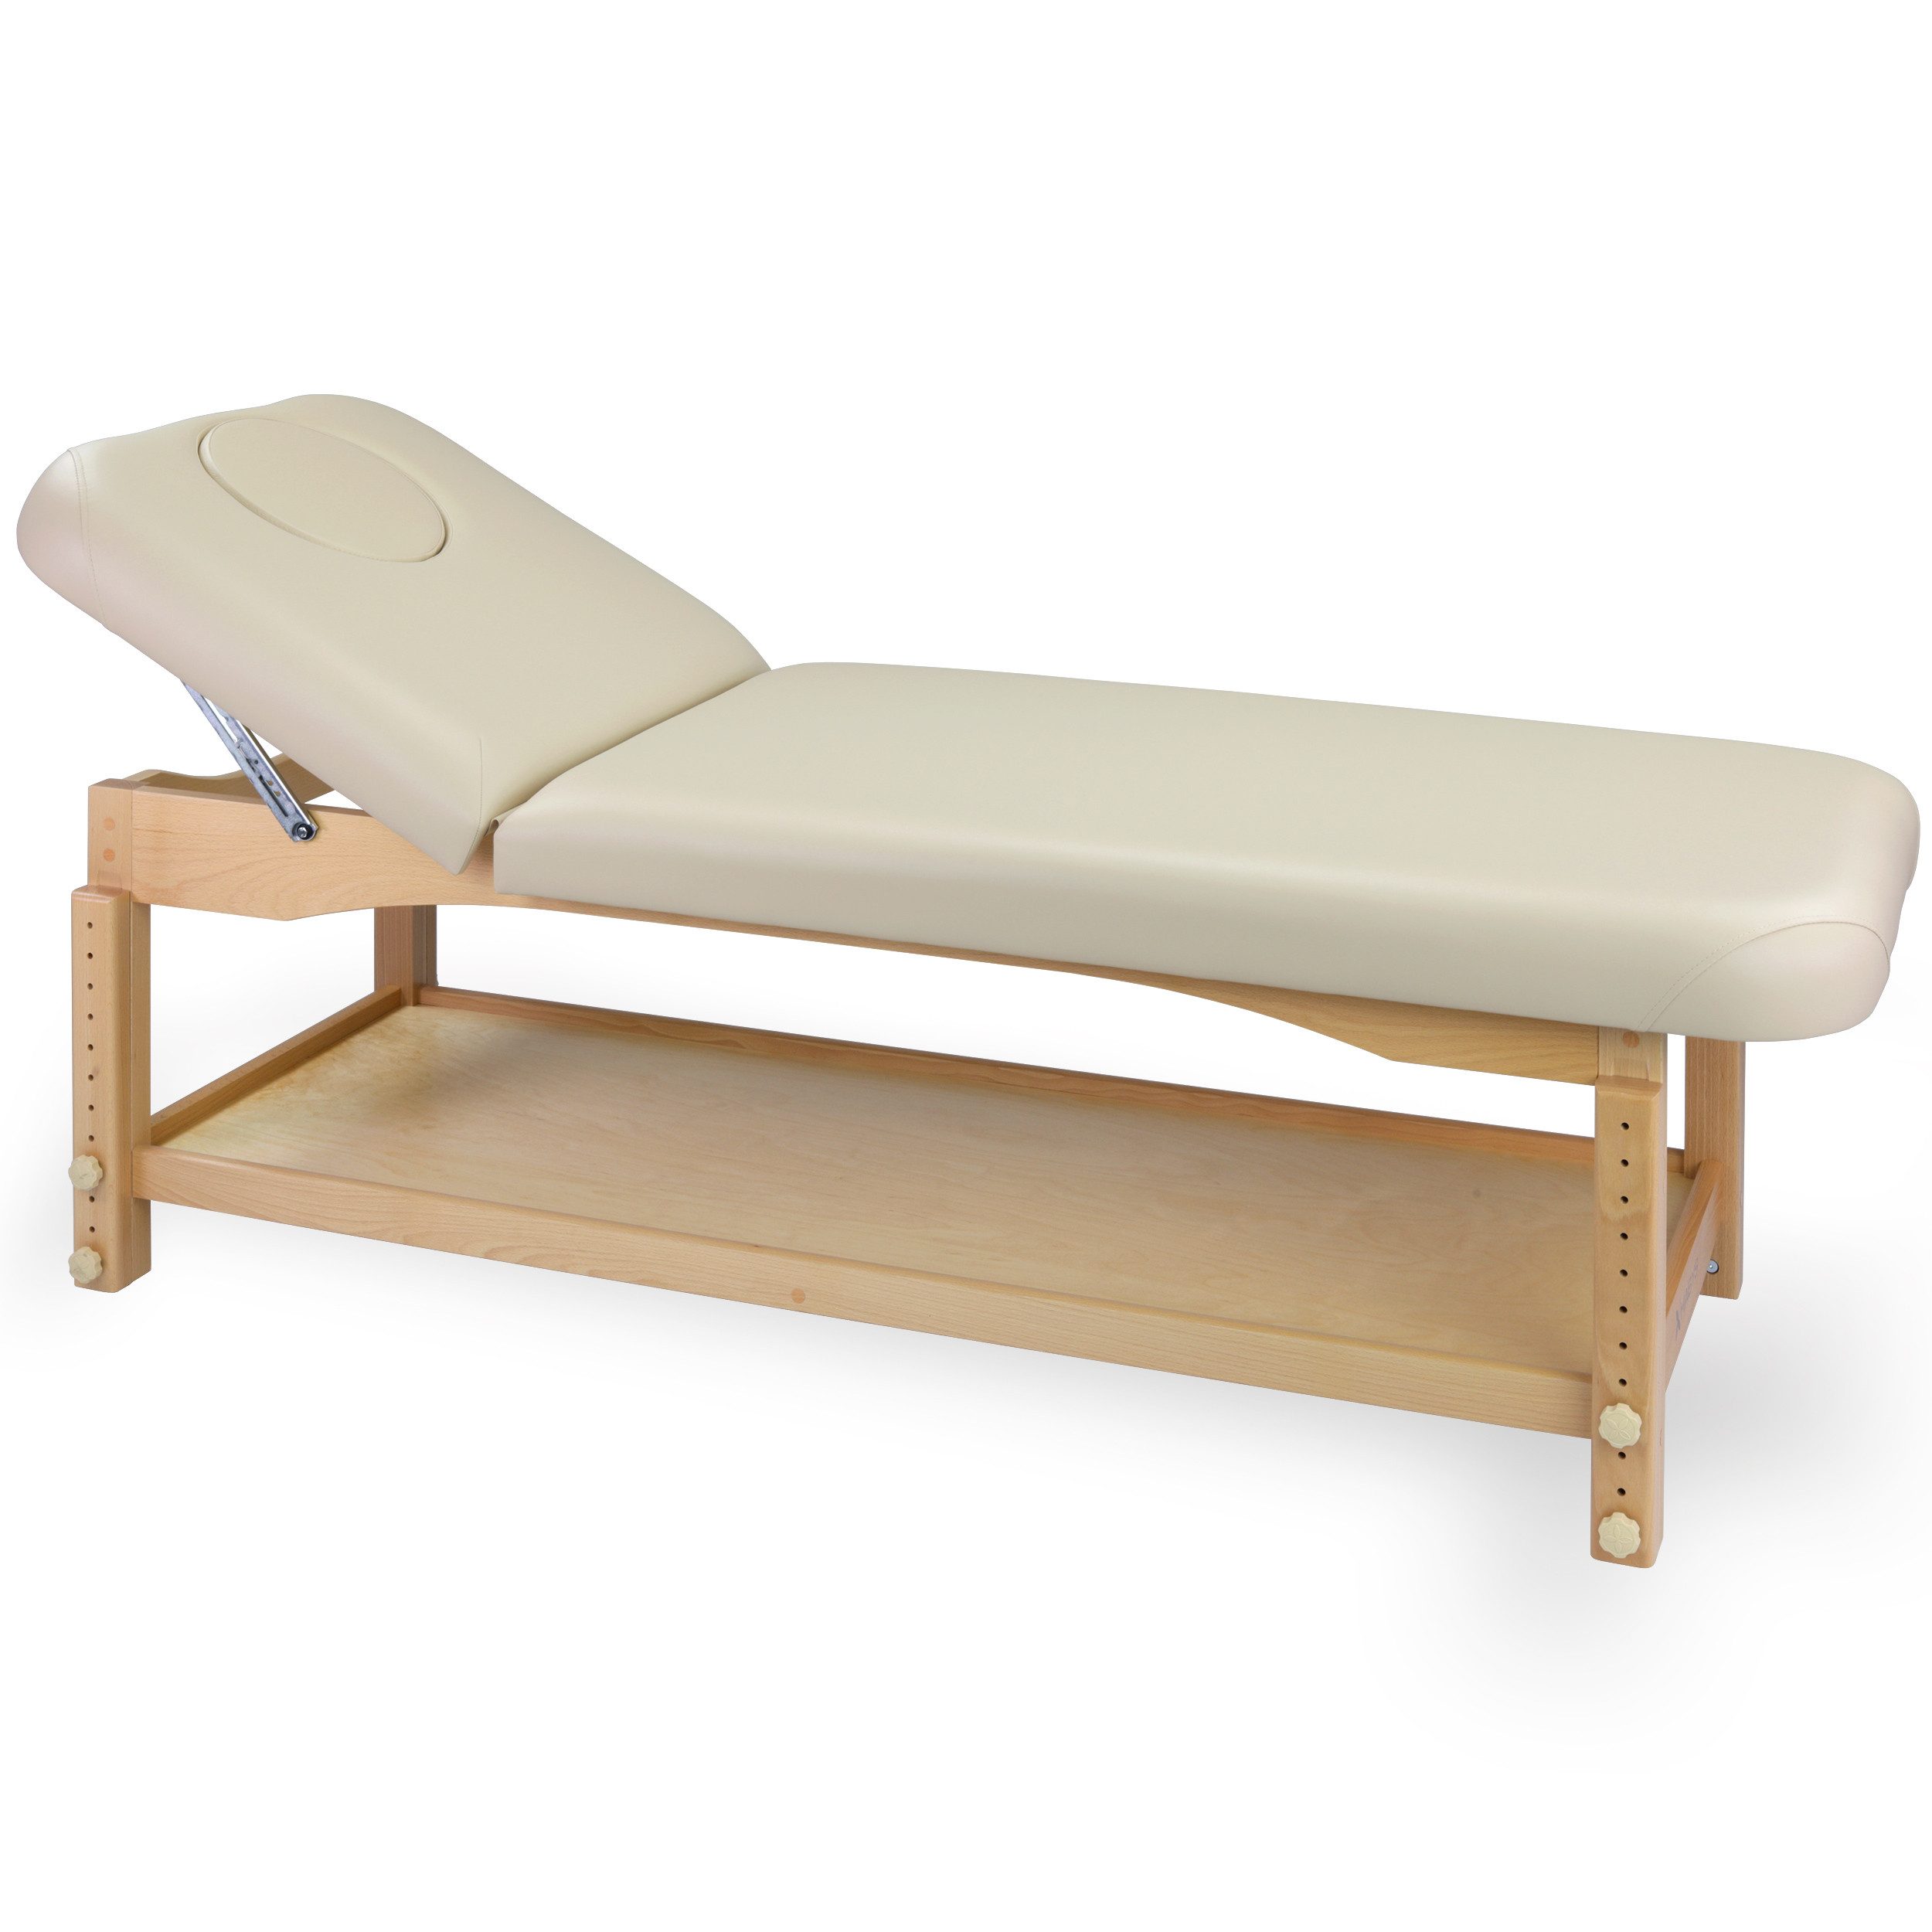 Habys Massageliege Habys Nova Komfort Behandlungsliege Massageliege Verstellbar Holz